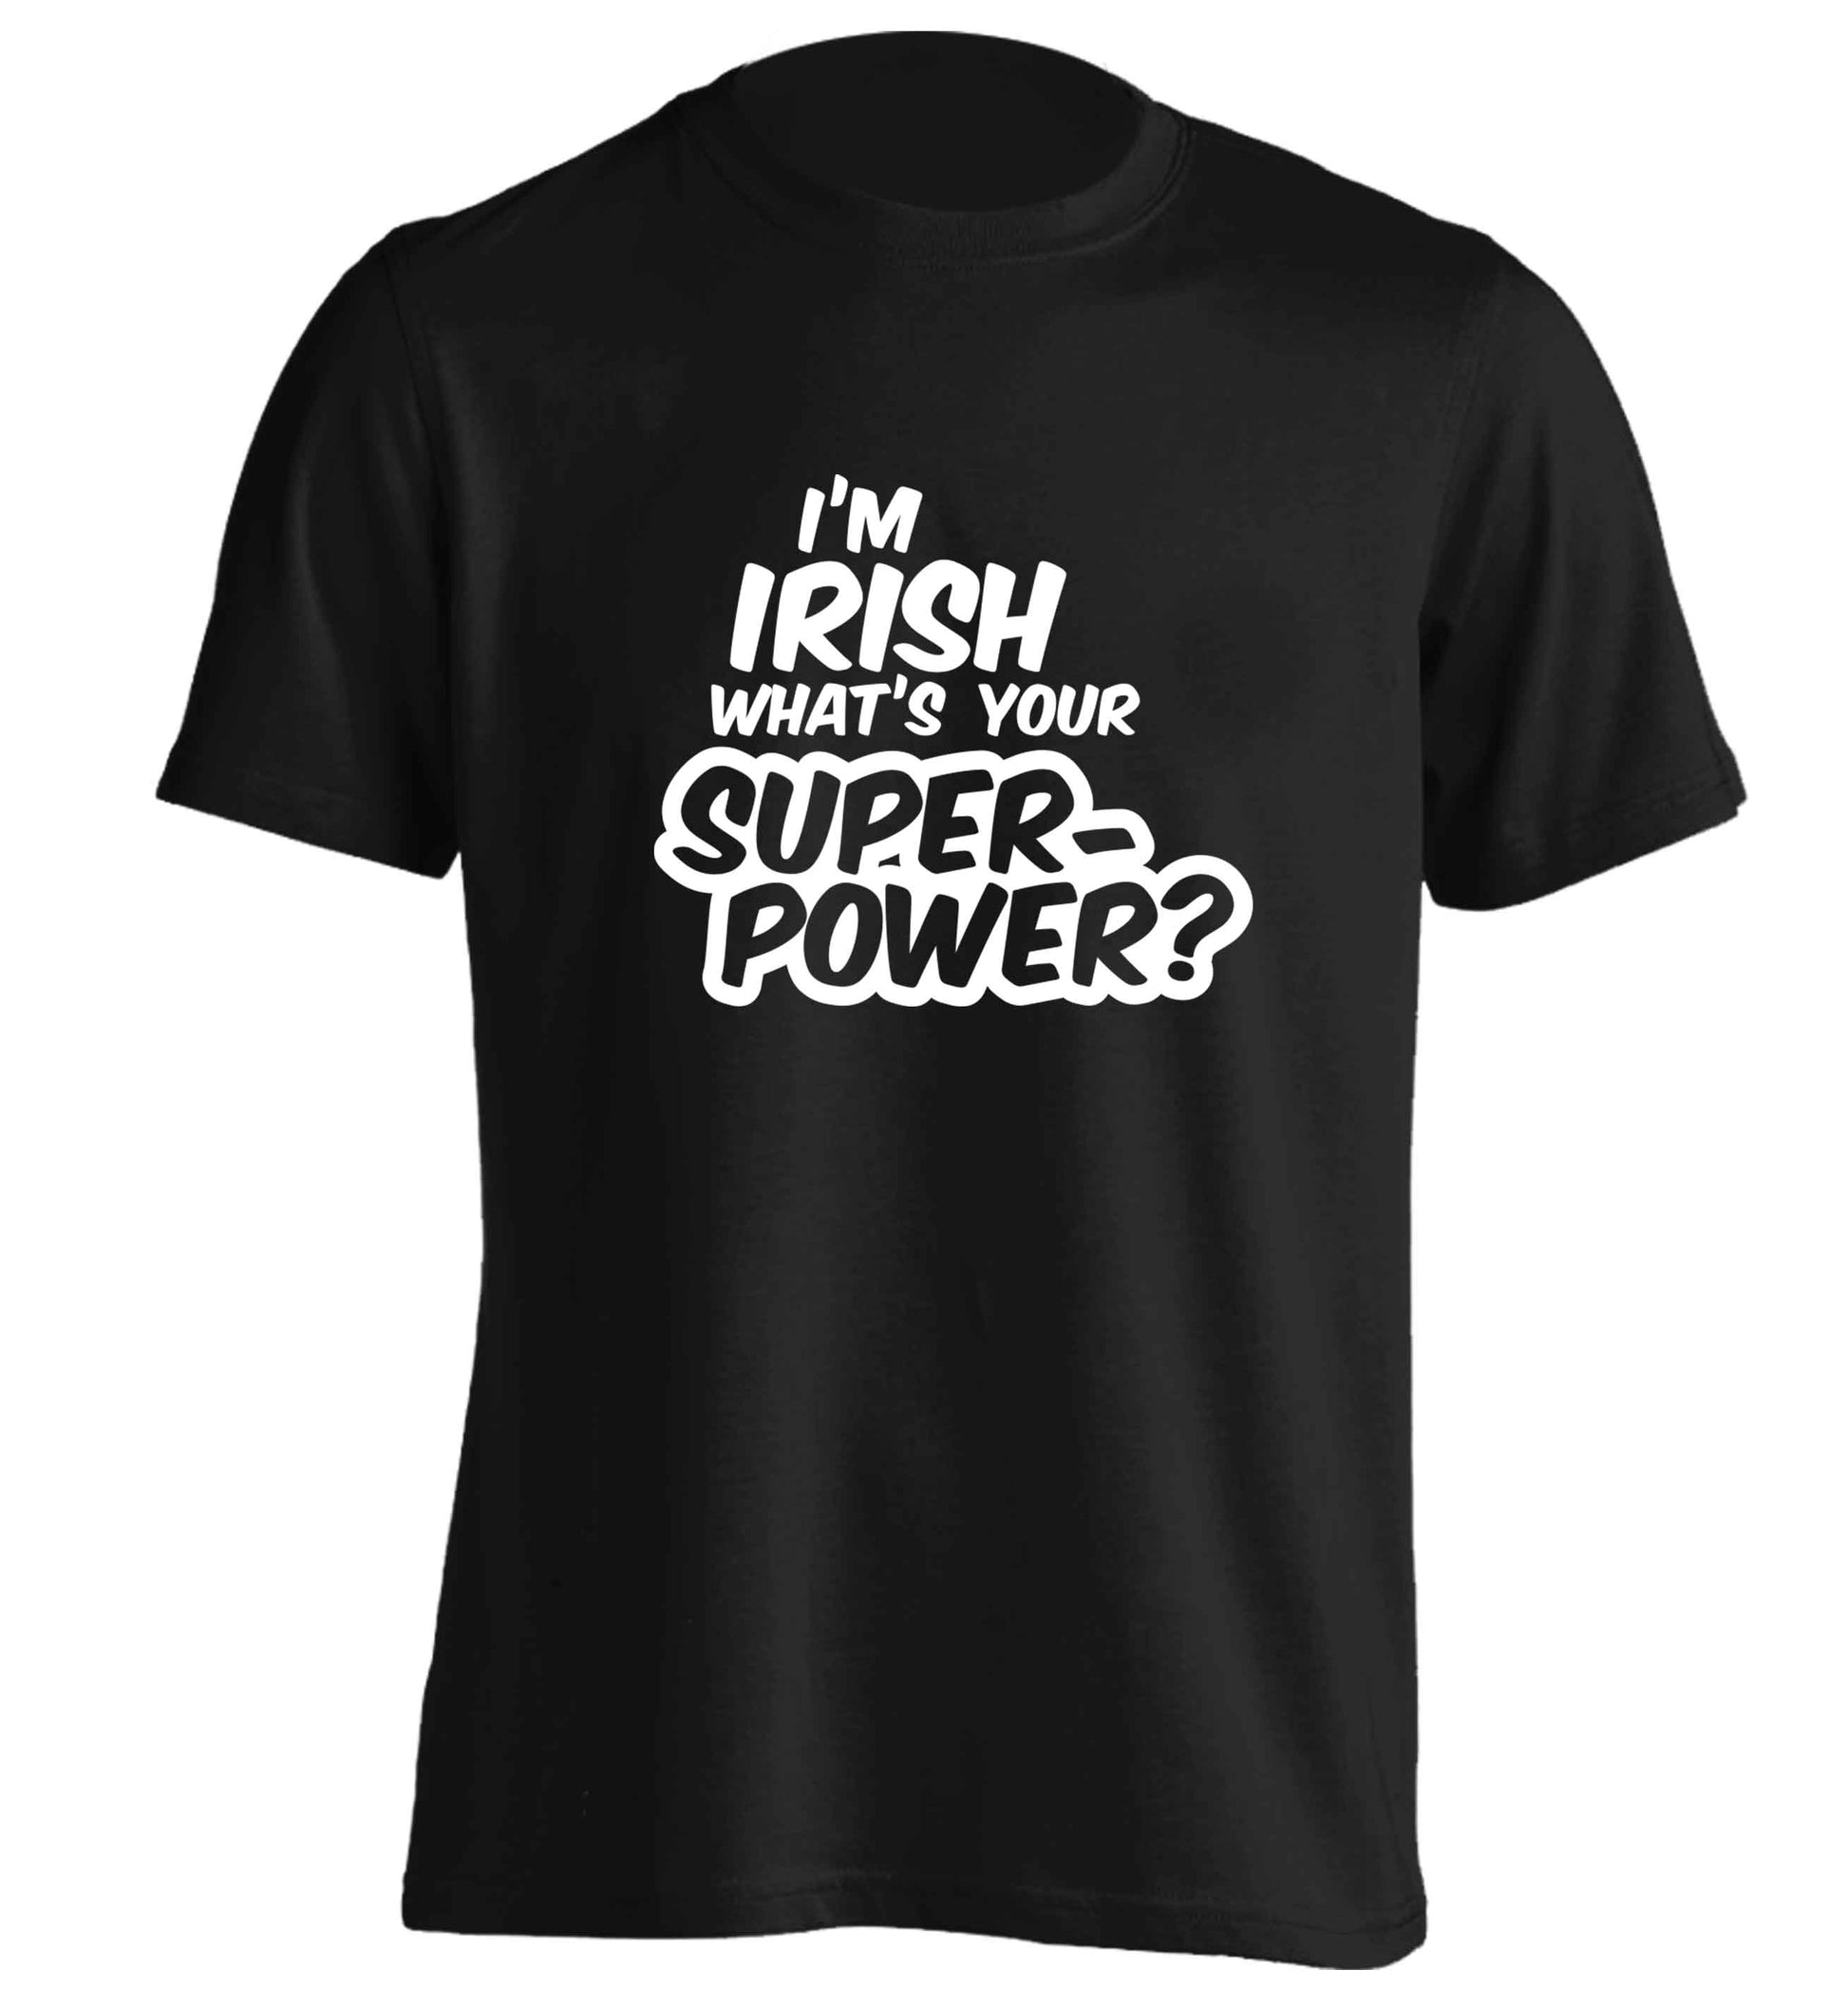 I'm Irish what's your superpower? adults unisex black Tshirt 2XL